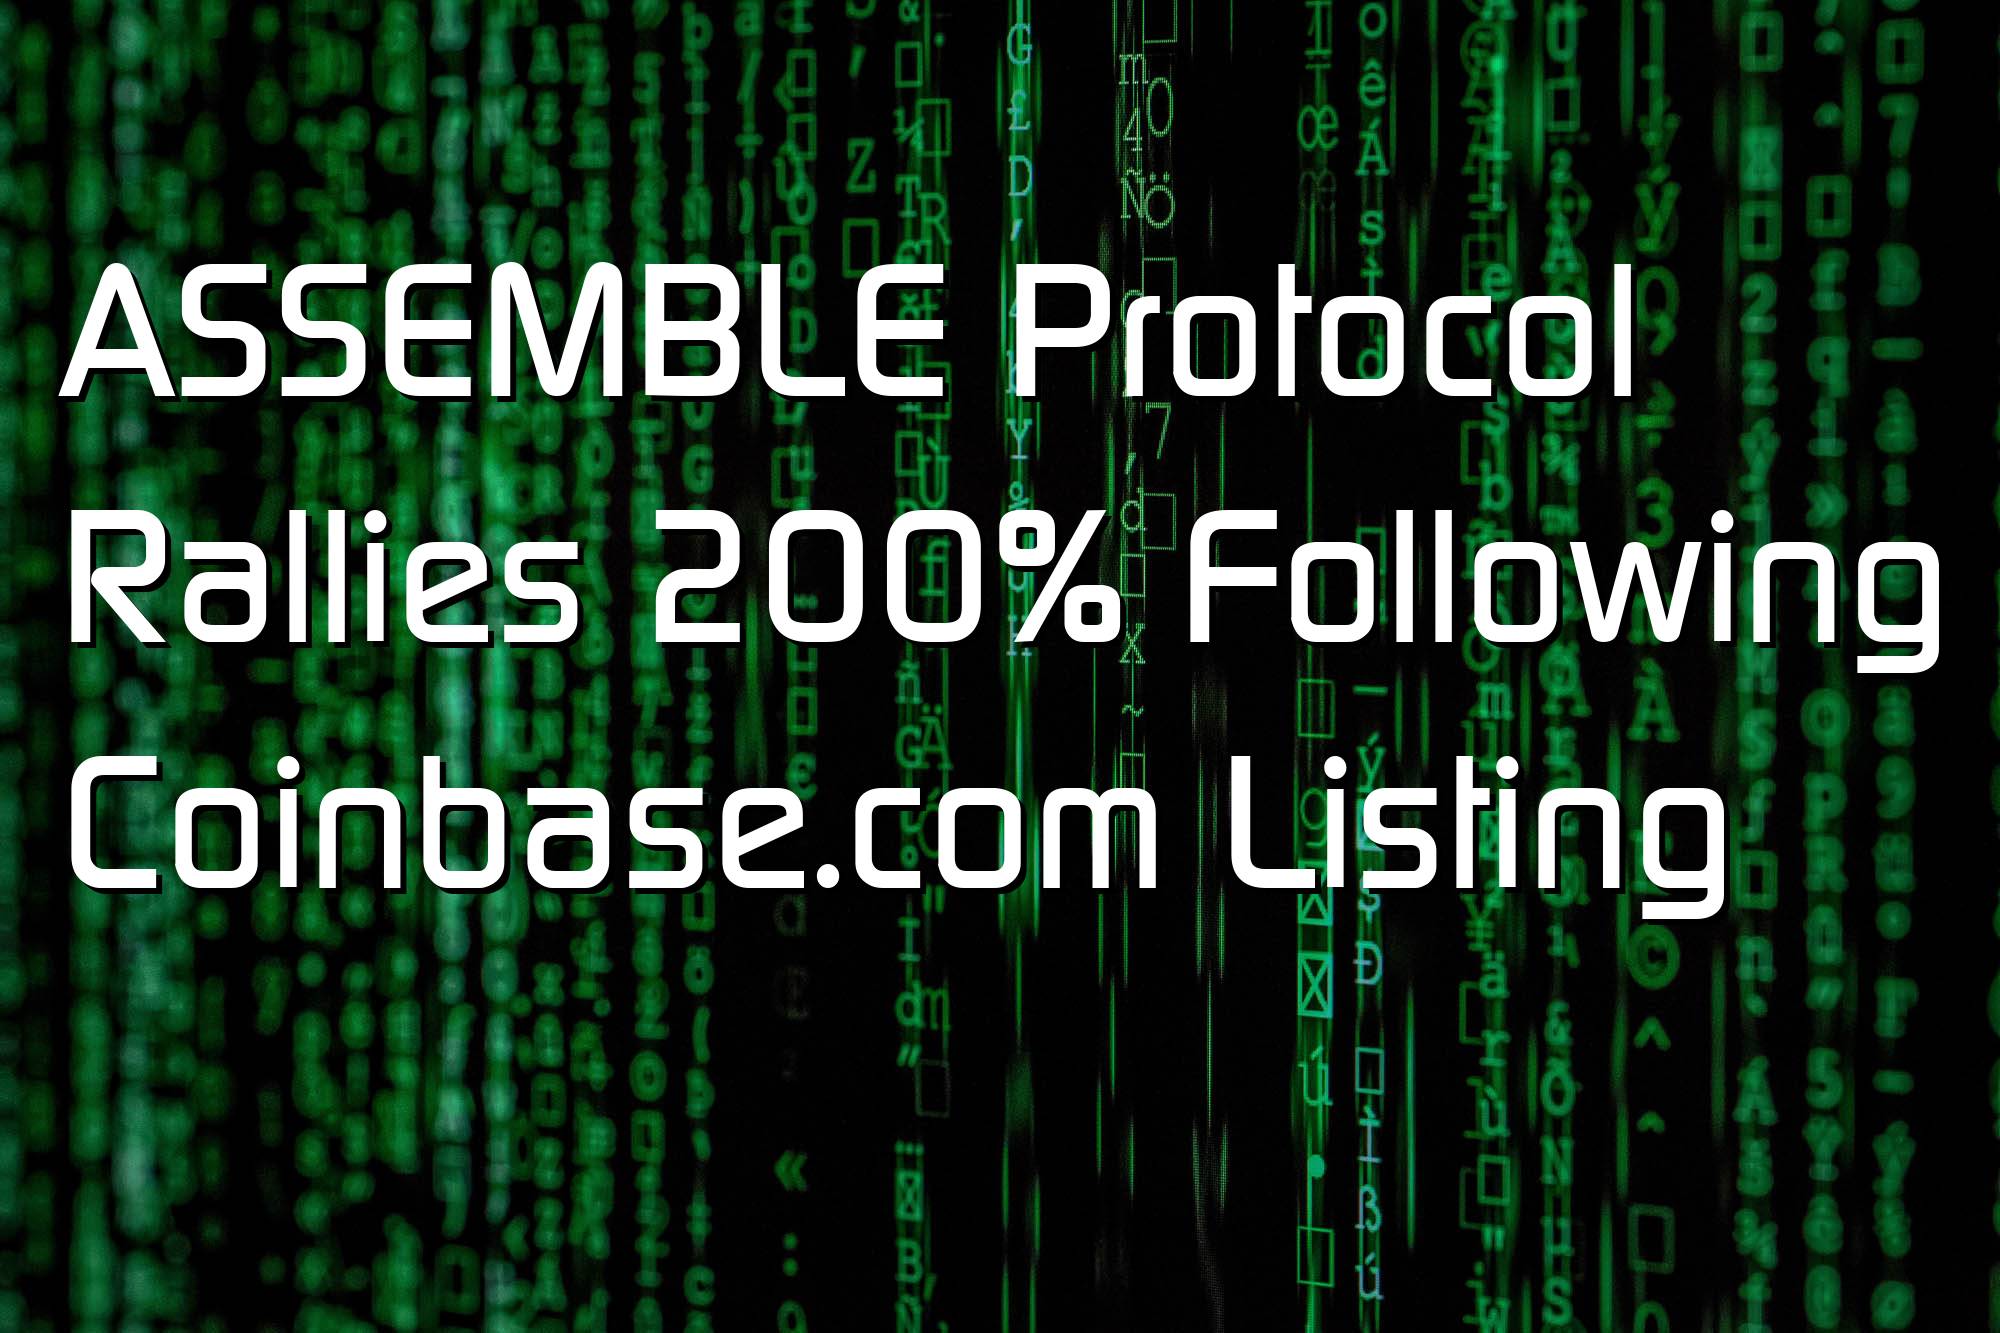 @$61126.01 ASSEMBLE Protocol Rallies 200% Following Coinbase.com Listing